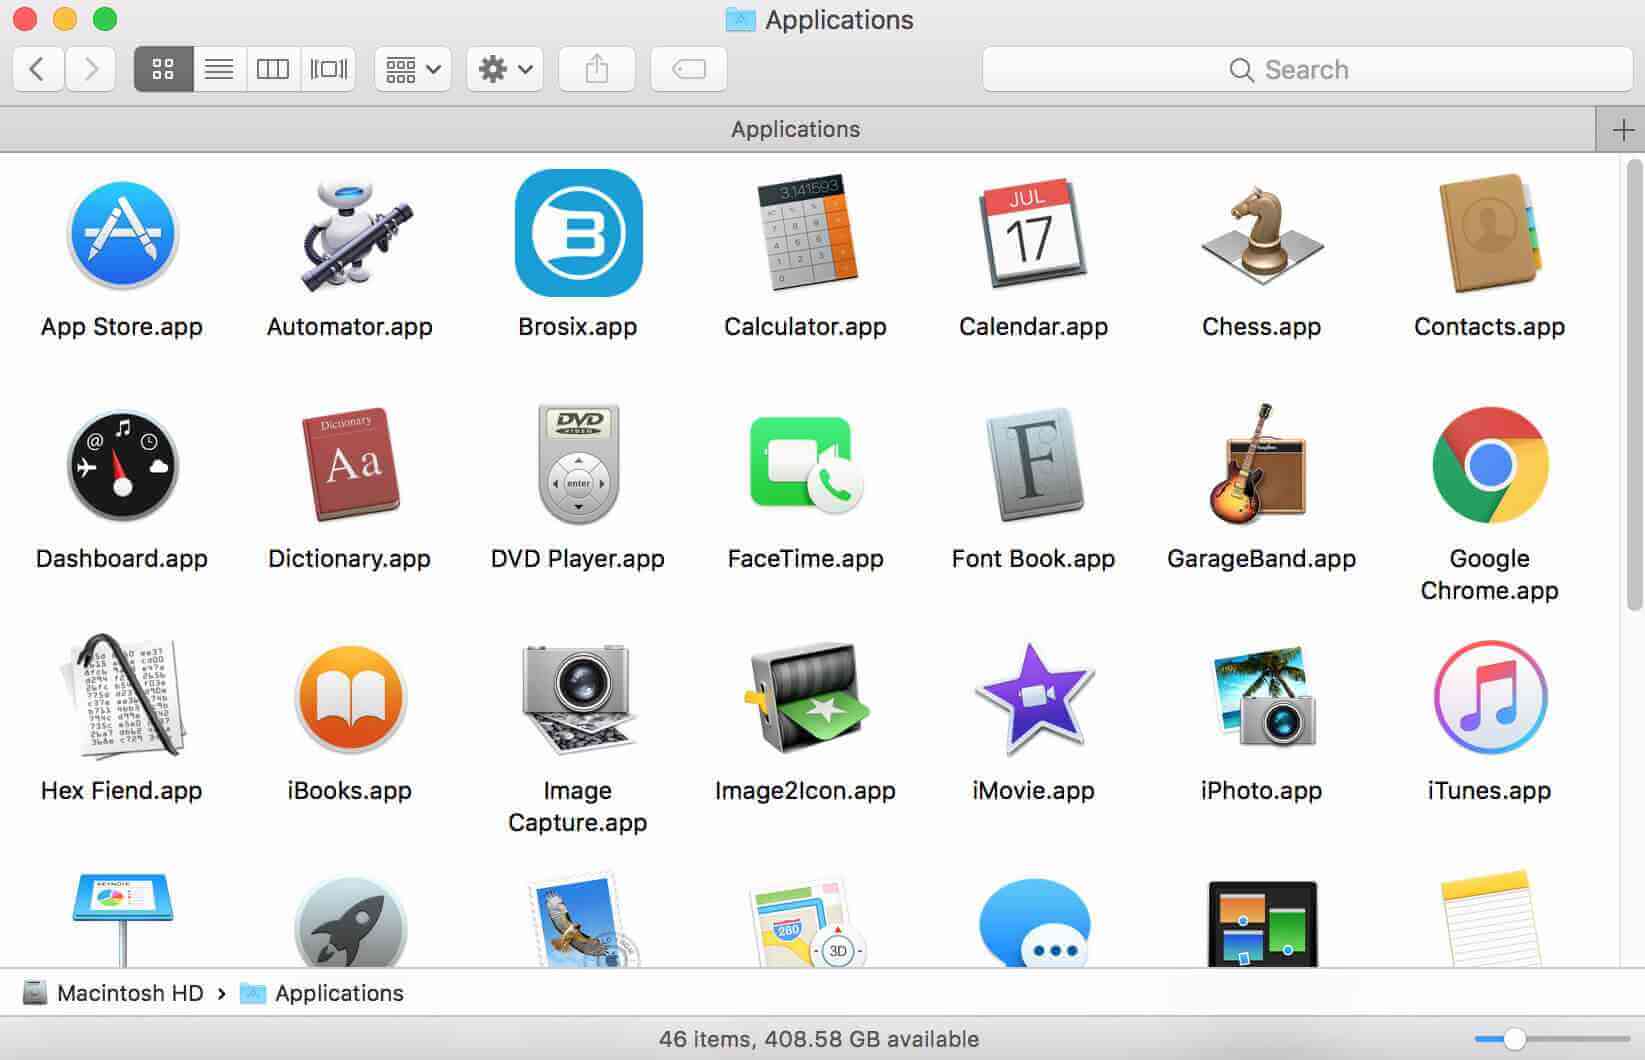 Brosix in Applications folder.